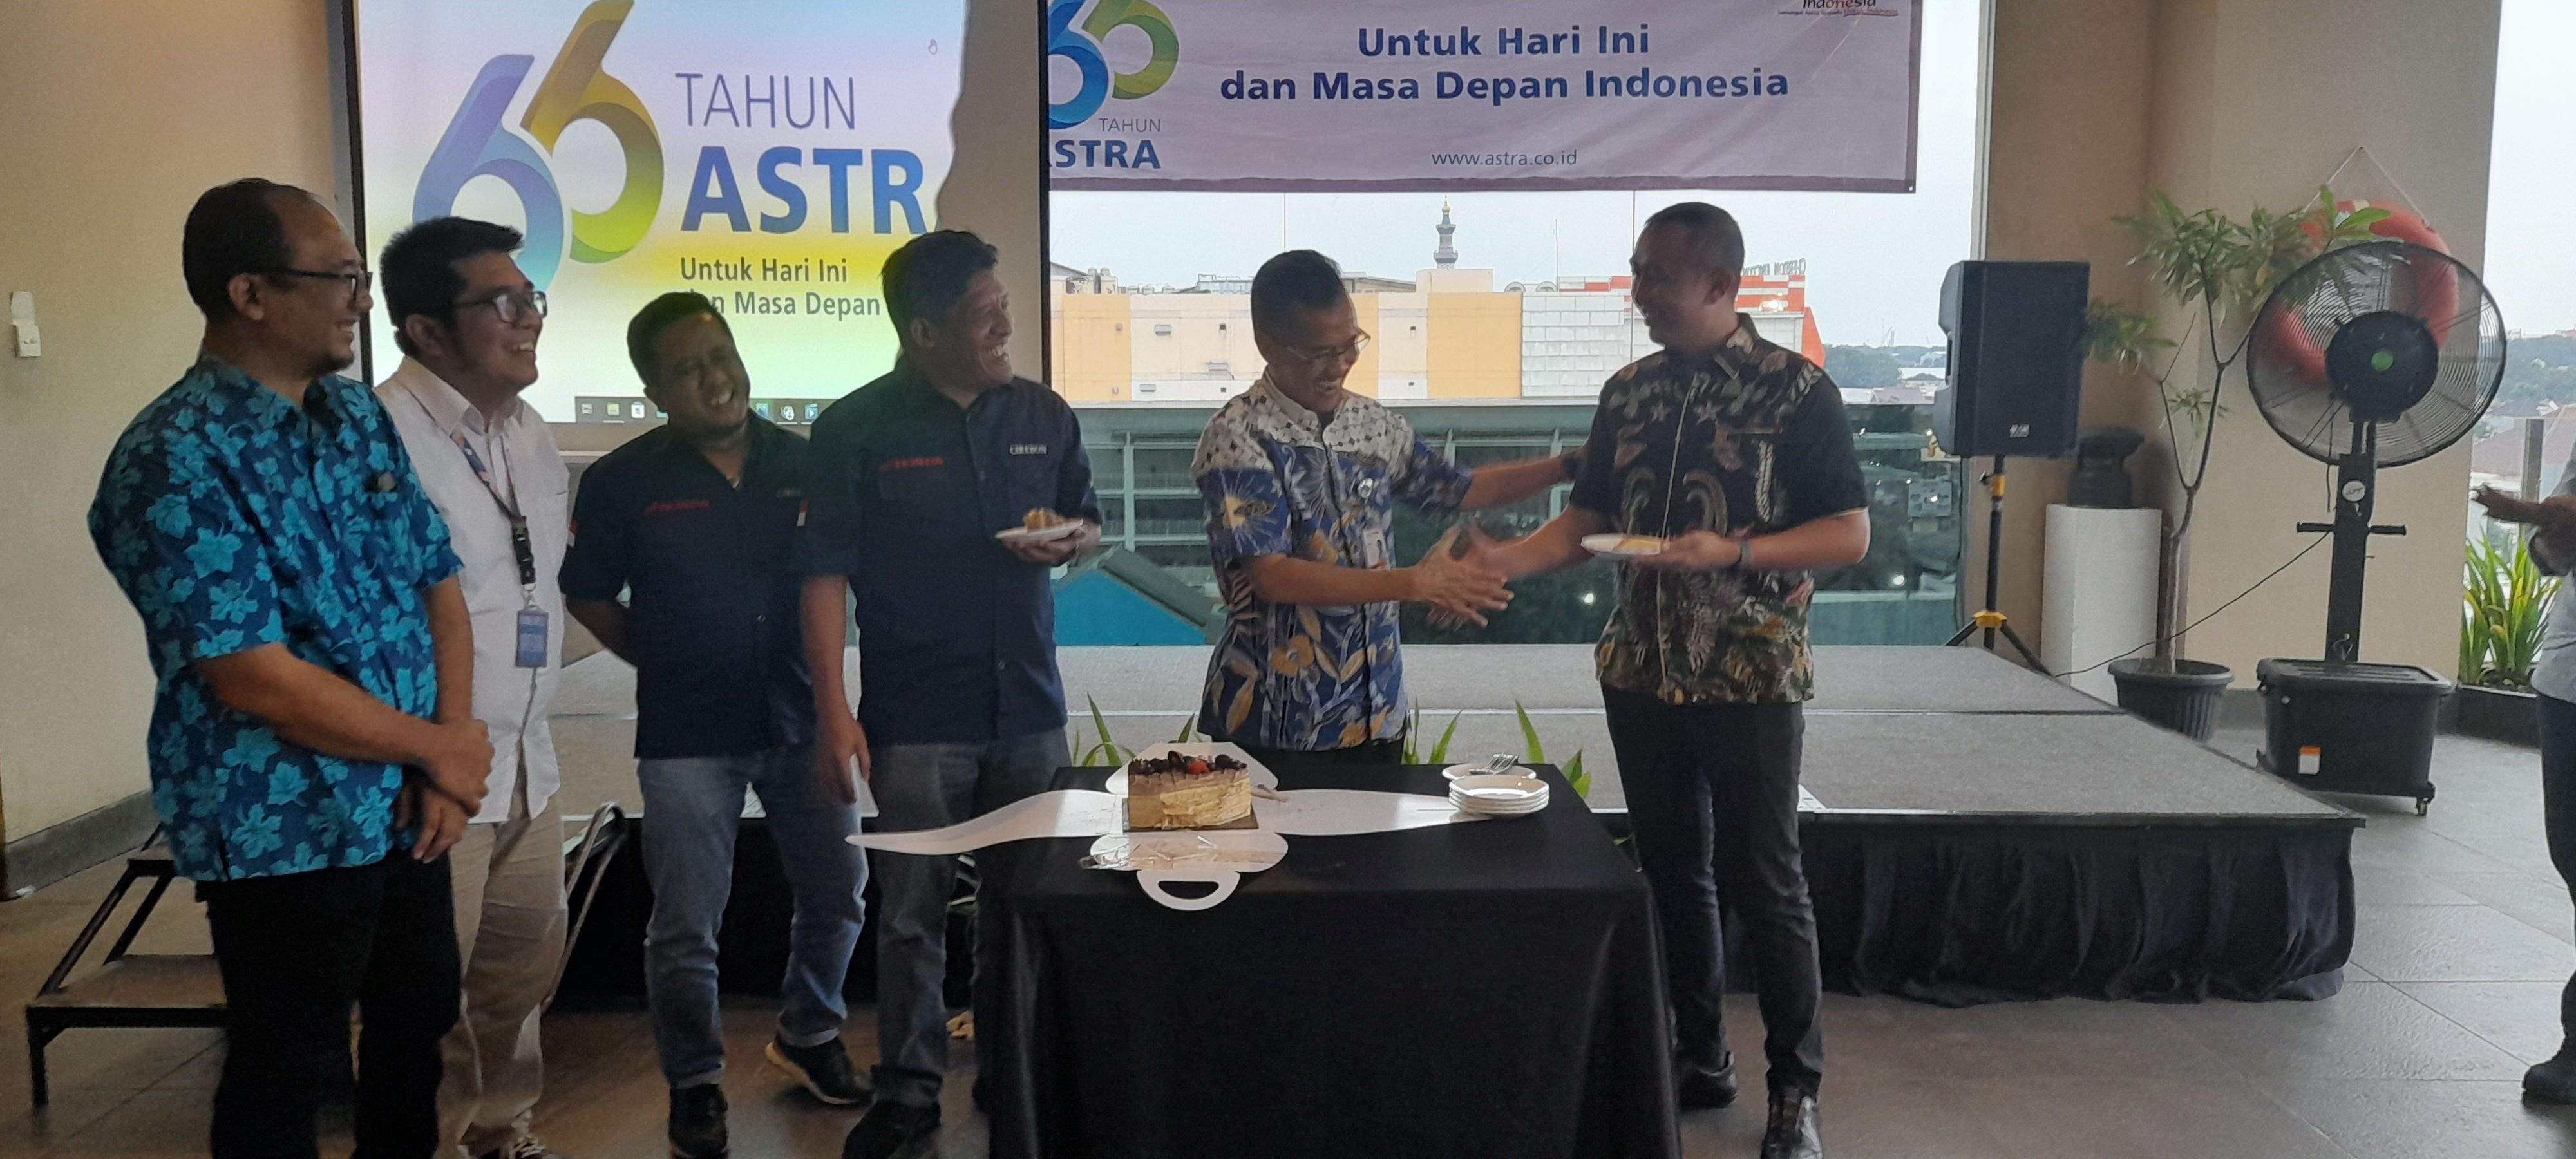 KETUA Koordinator Astra Grup Cirebon Raya, H.Winanro Menyerahkan kue HUT ke-66 Astra 